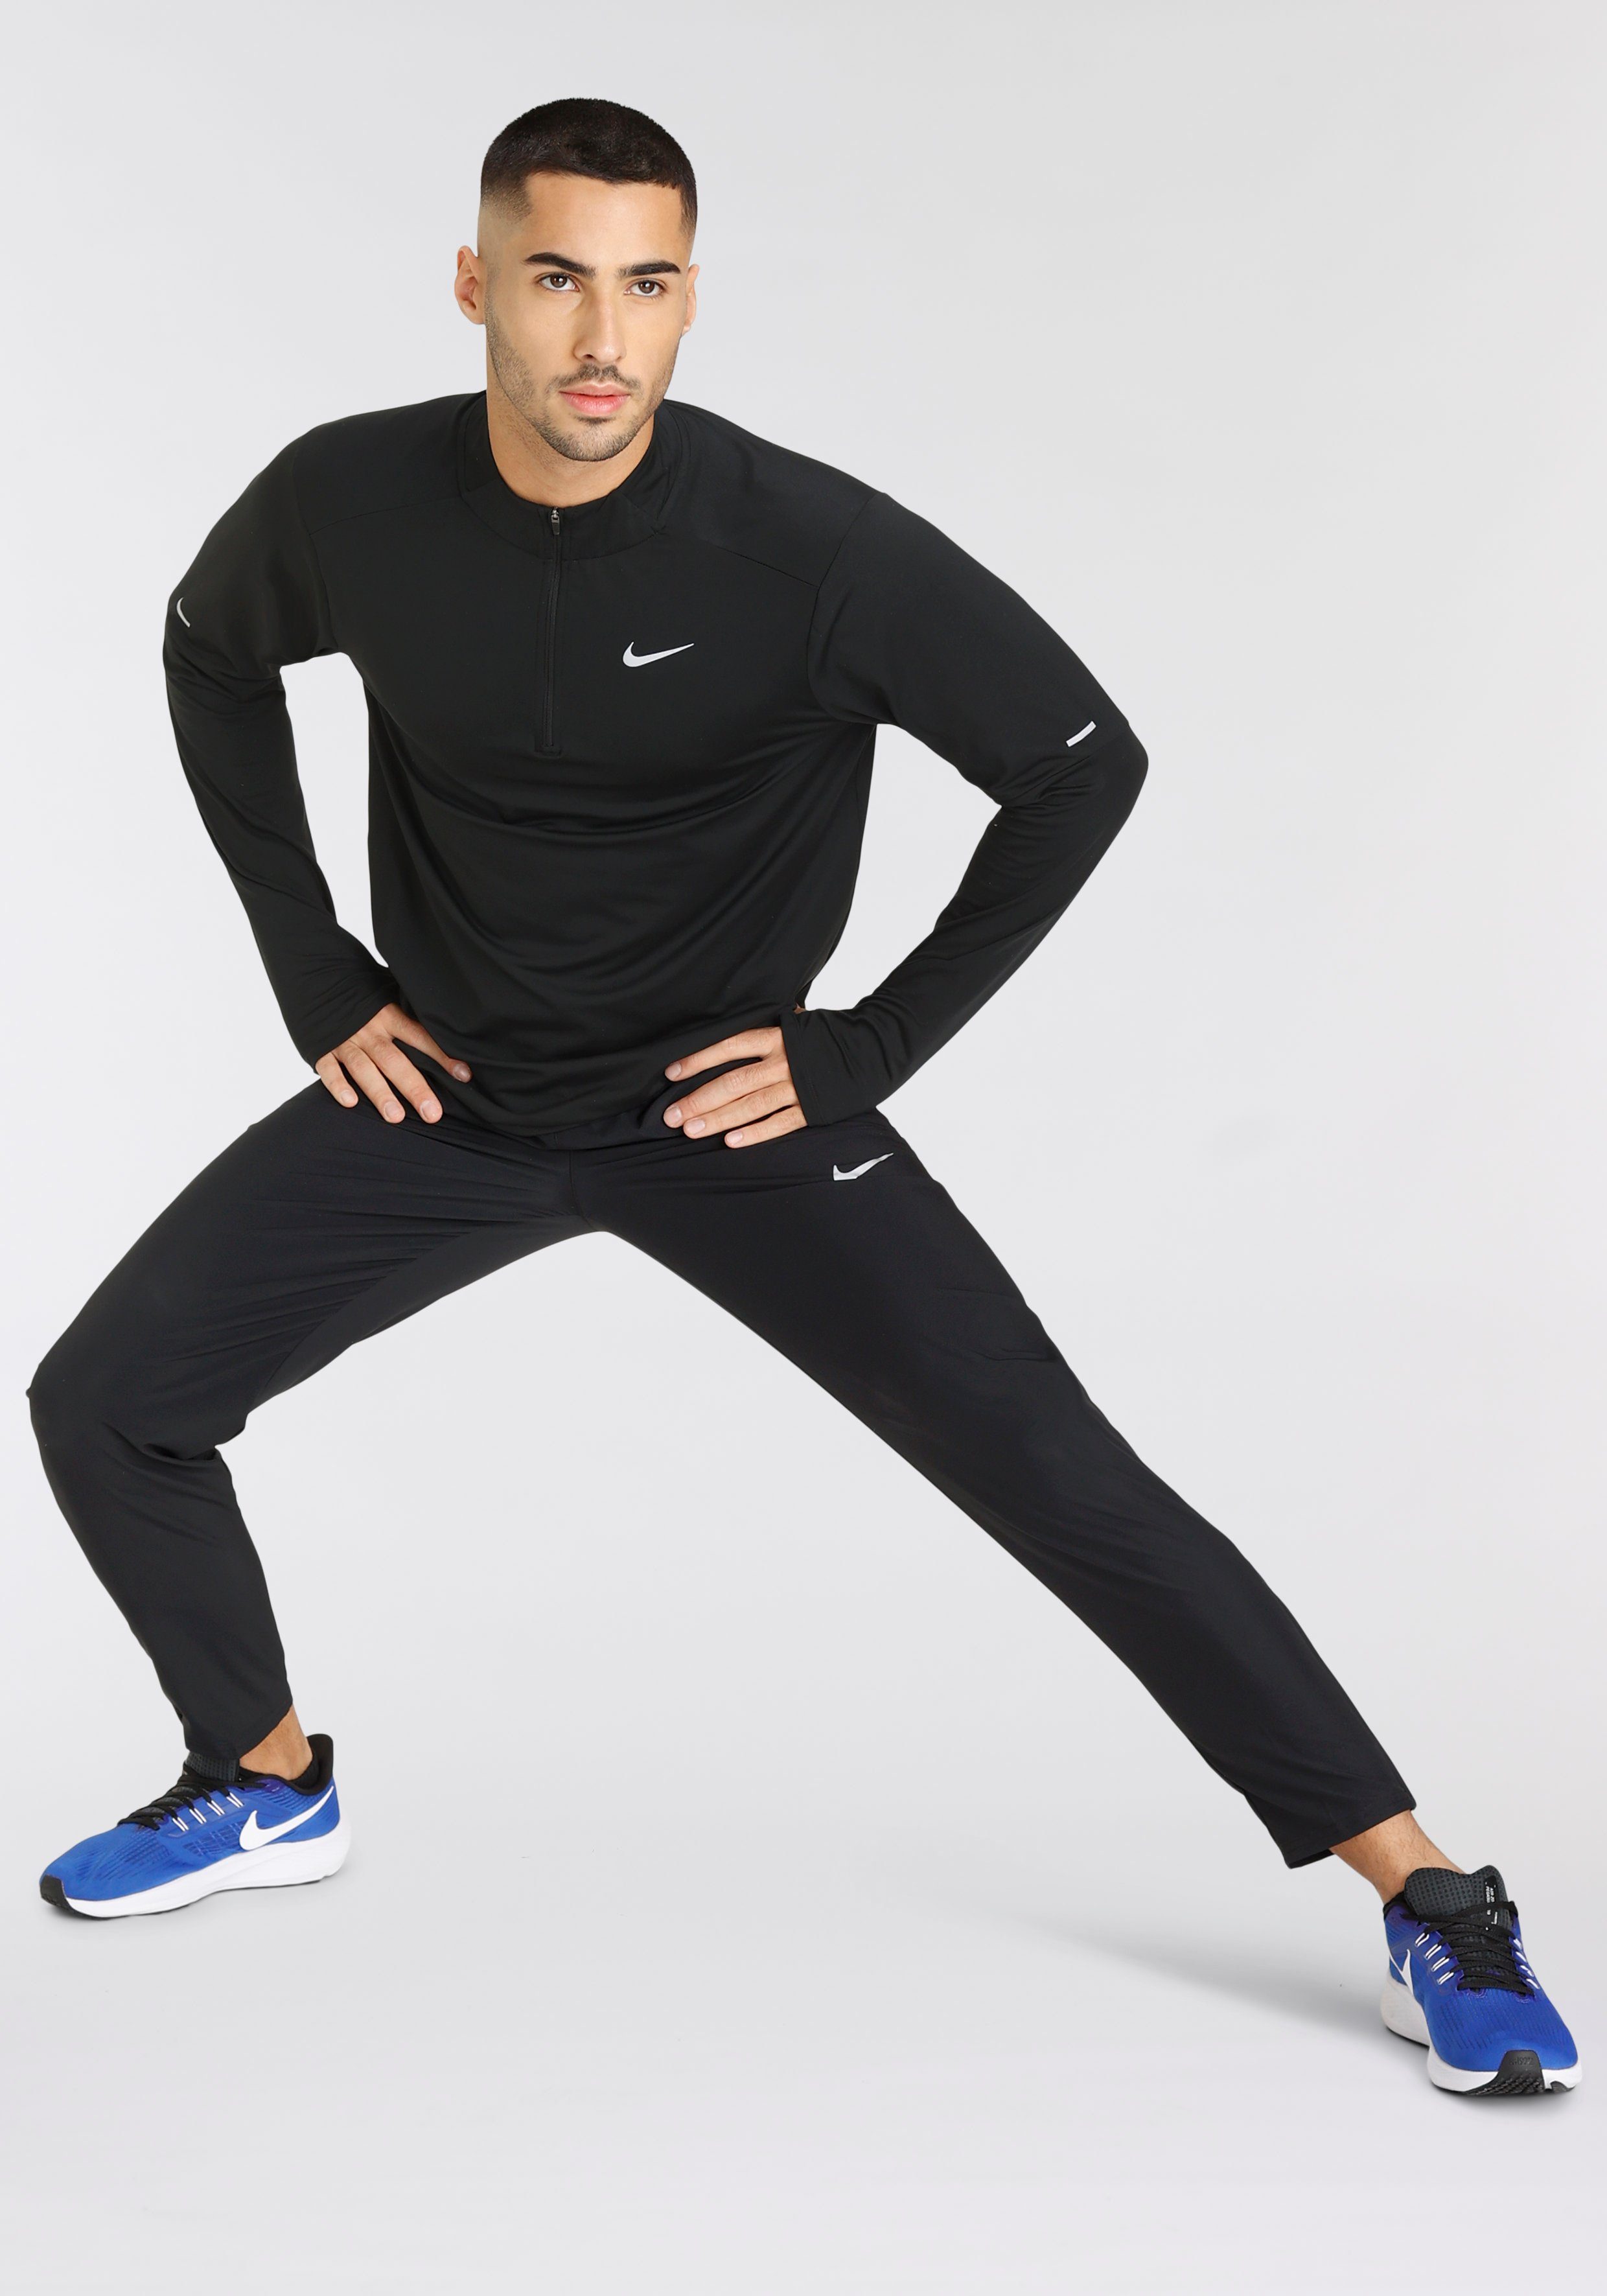 Nike Laufshirt Running schwarz Men's Dri-FIT 1/-Zip Top Element